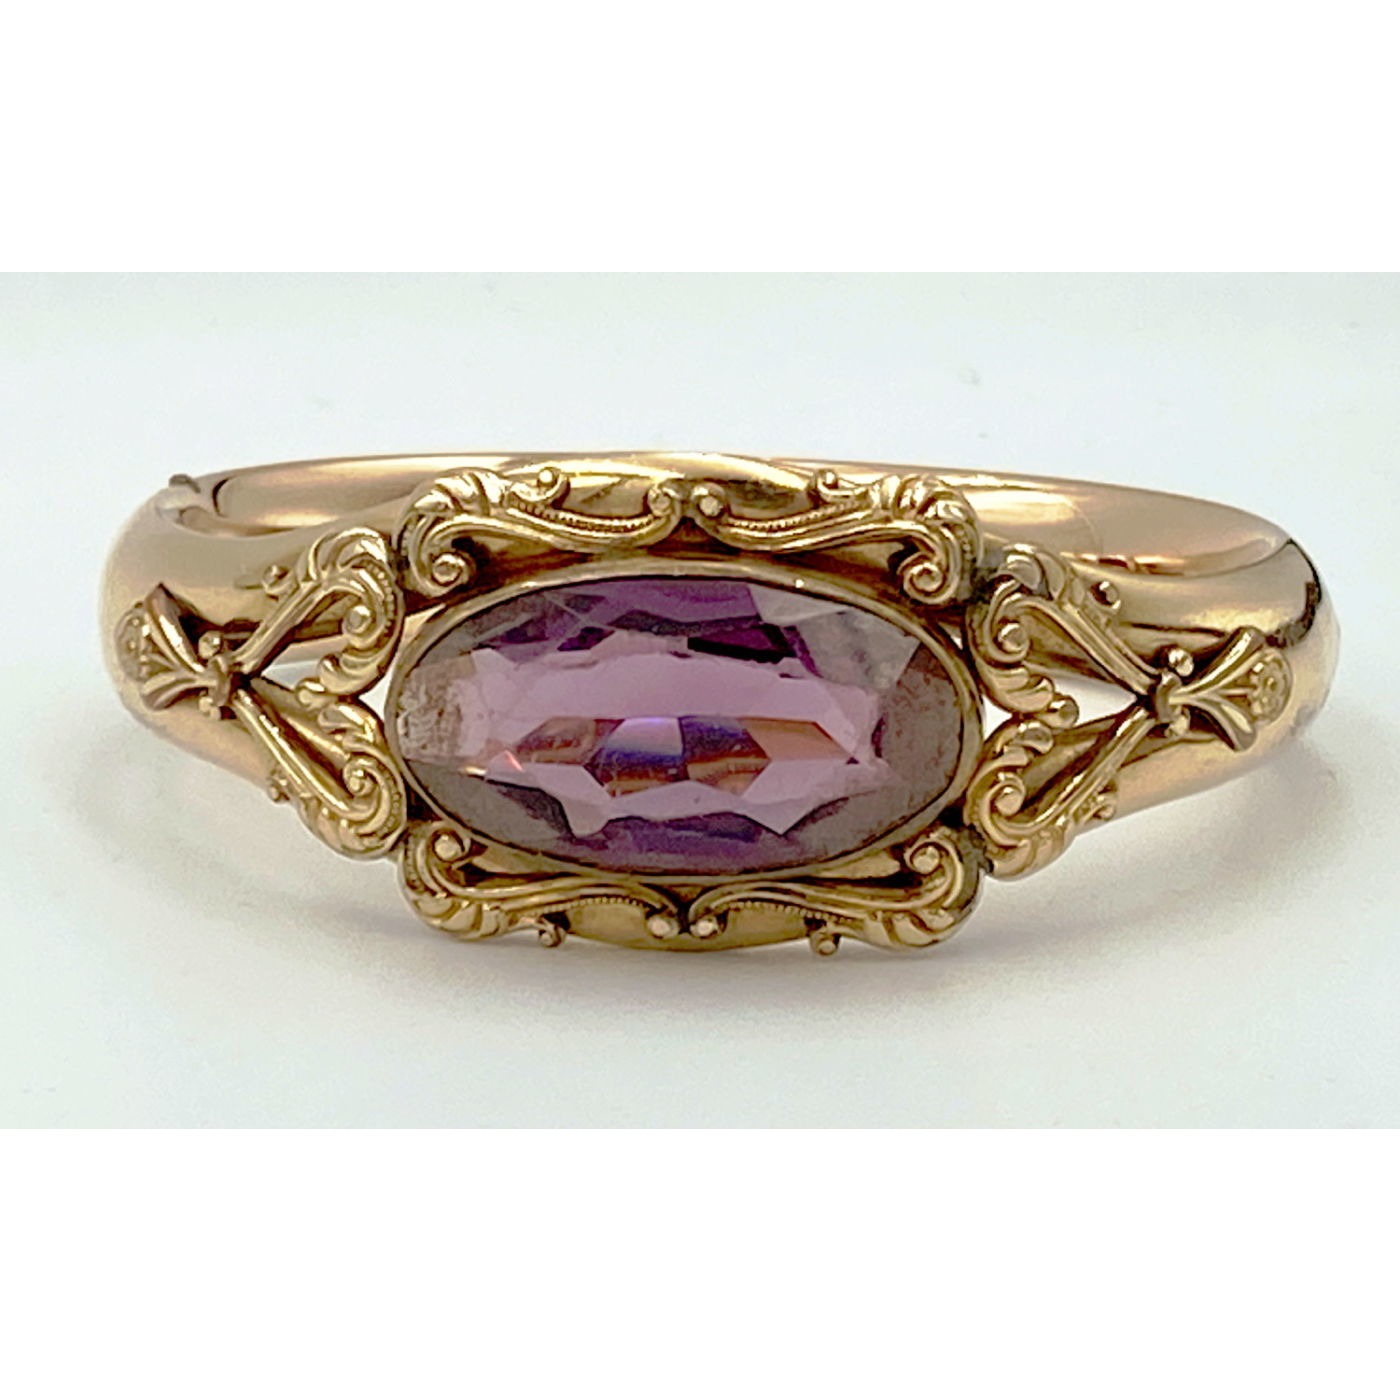 Prettiest Center Purple Stone Larger-Than-Average Engagement Bangle